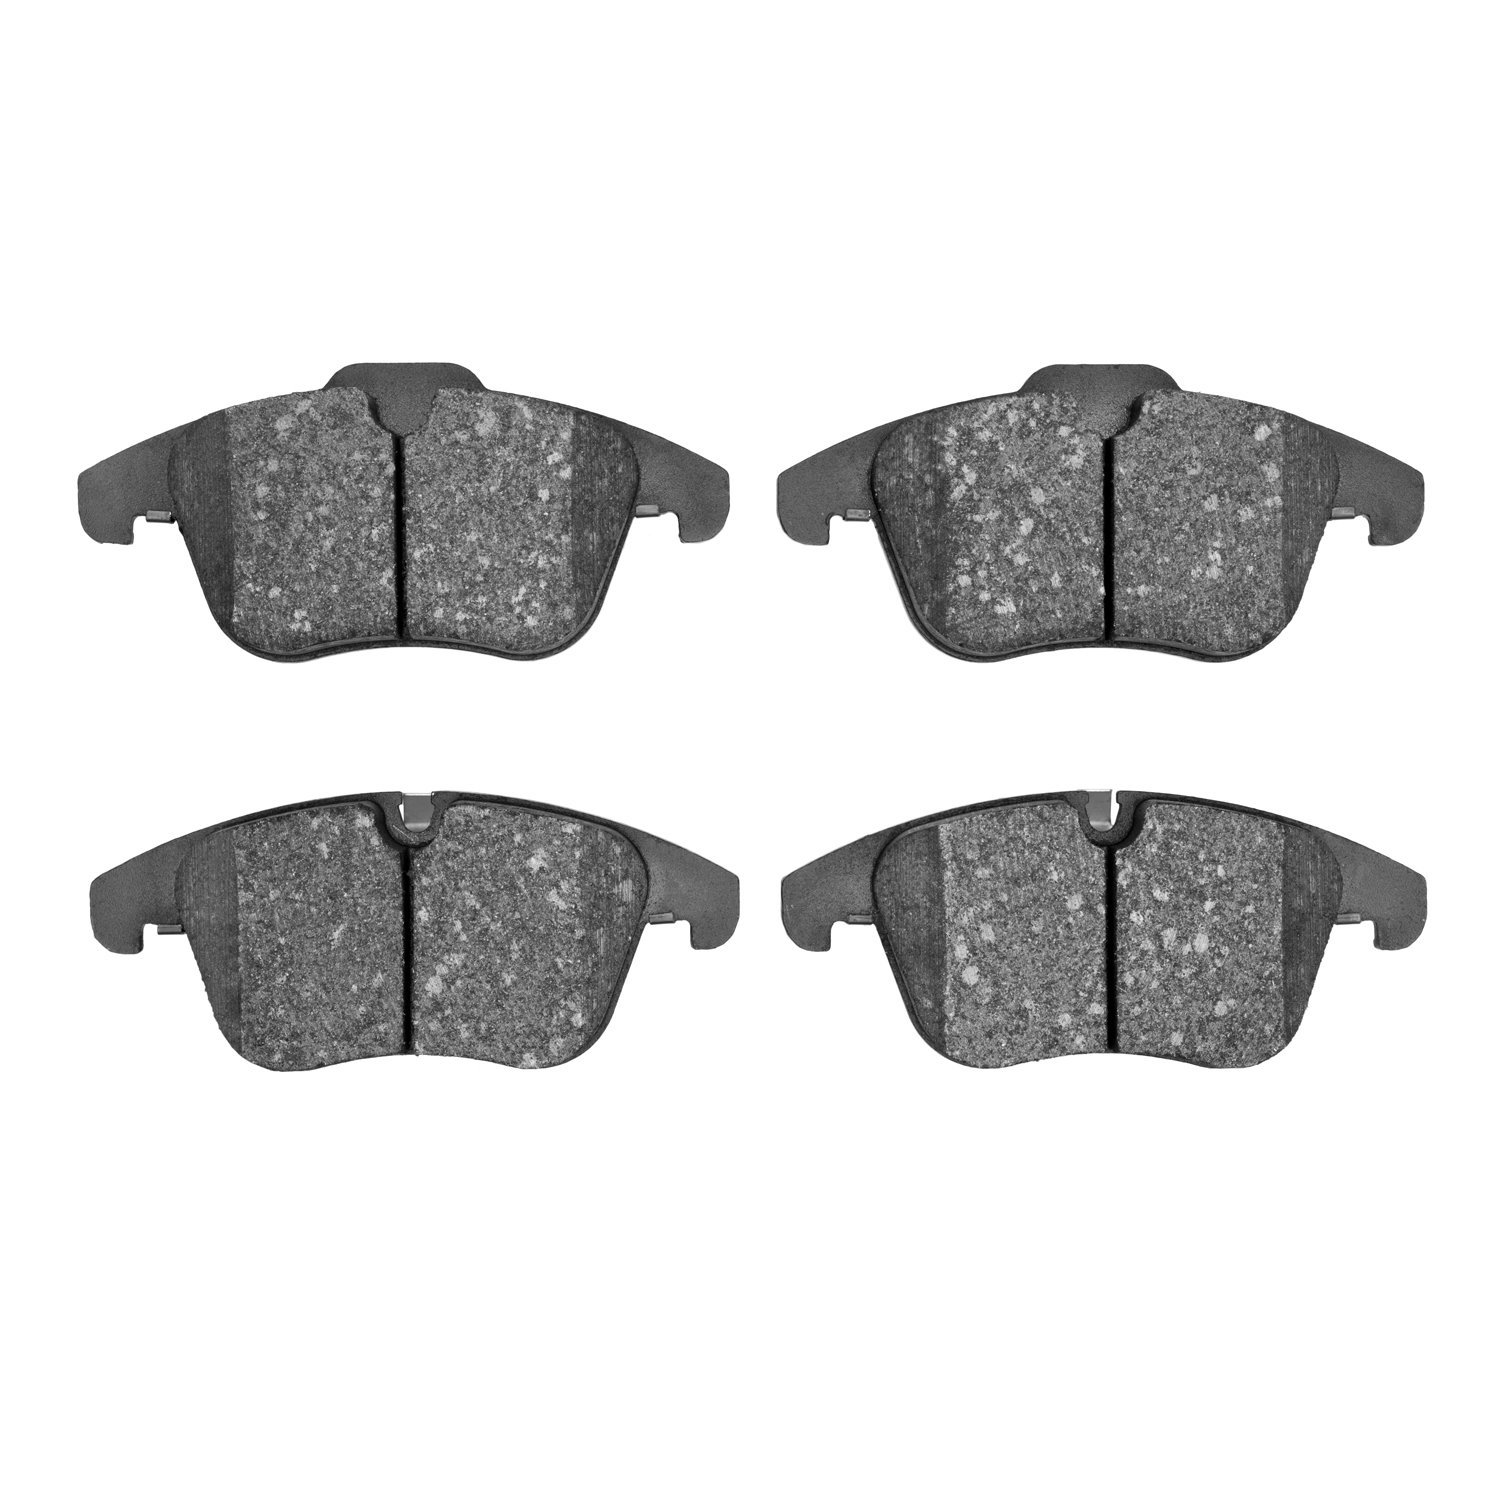 Semi-Metallic Brake Pads, 2006-2018 Fits Multiple Makes/Models, Position: Front